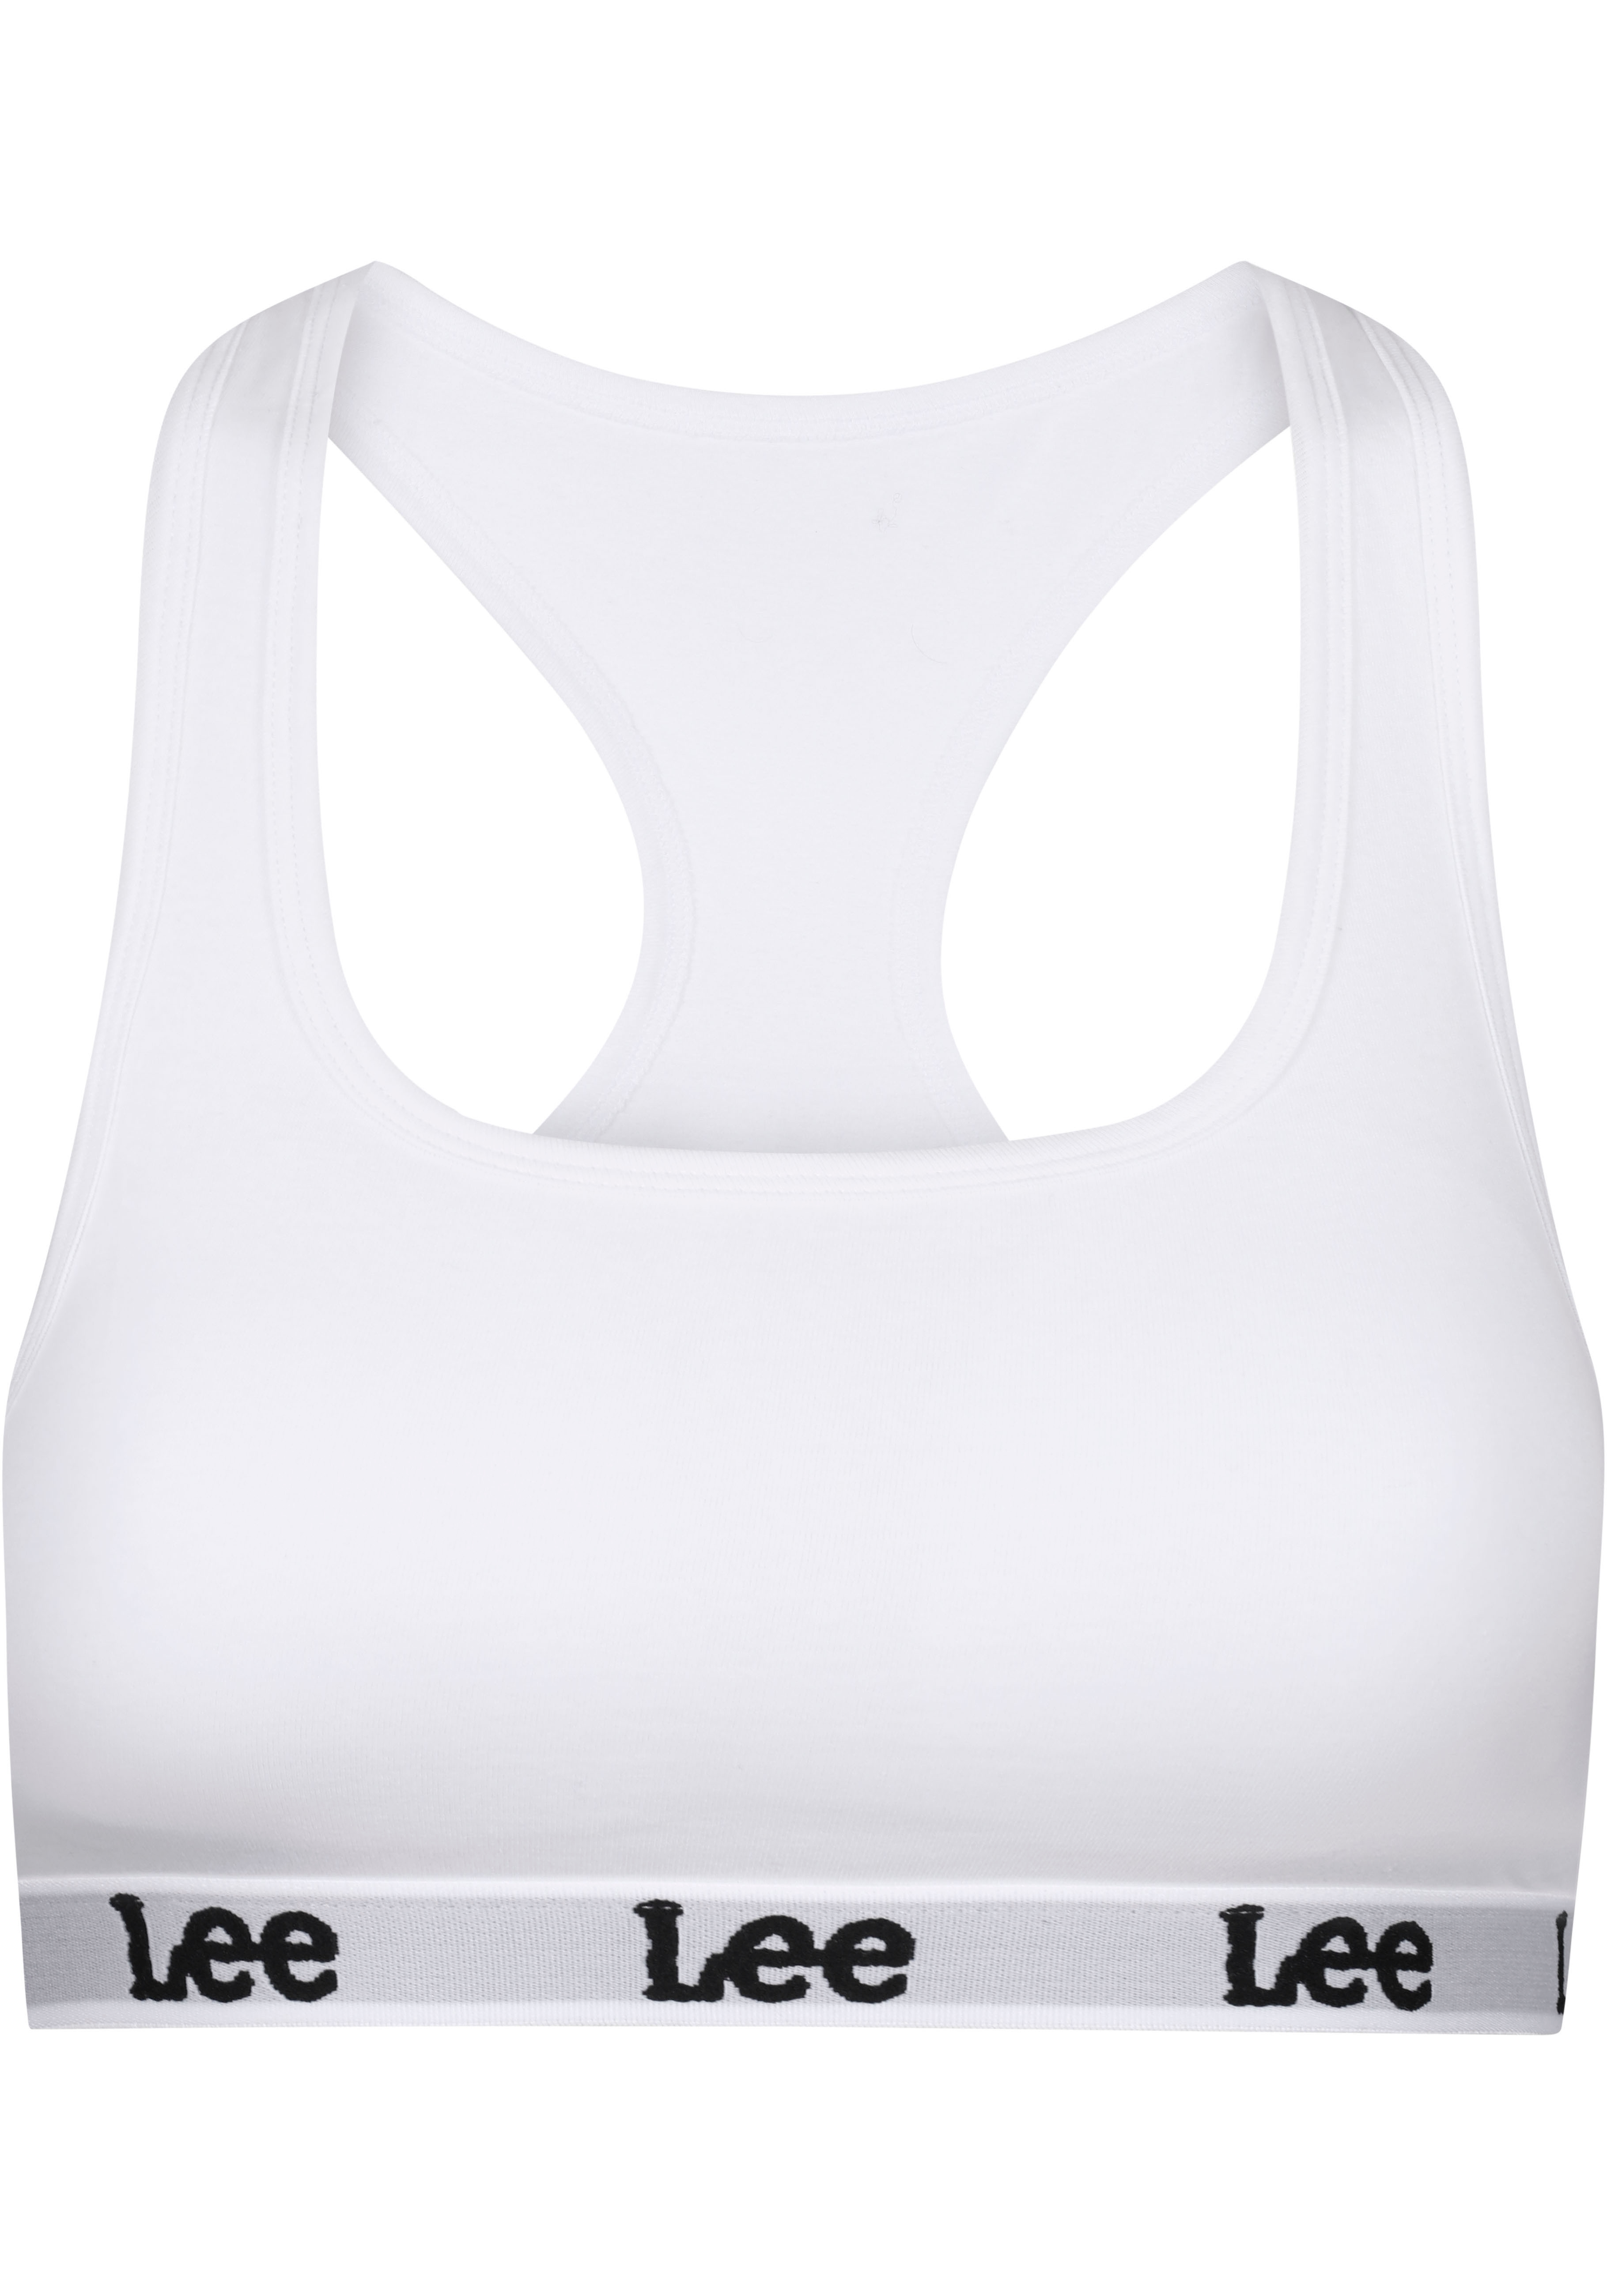 Lee Bustier » Diana «, ohne Bügel, herausnehmbare Cups-Lee 1